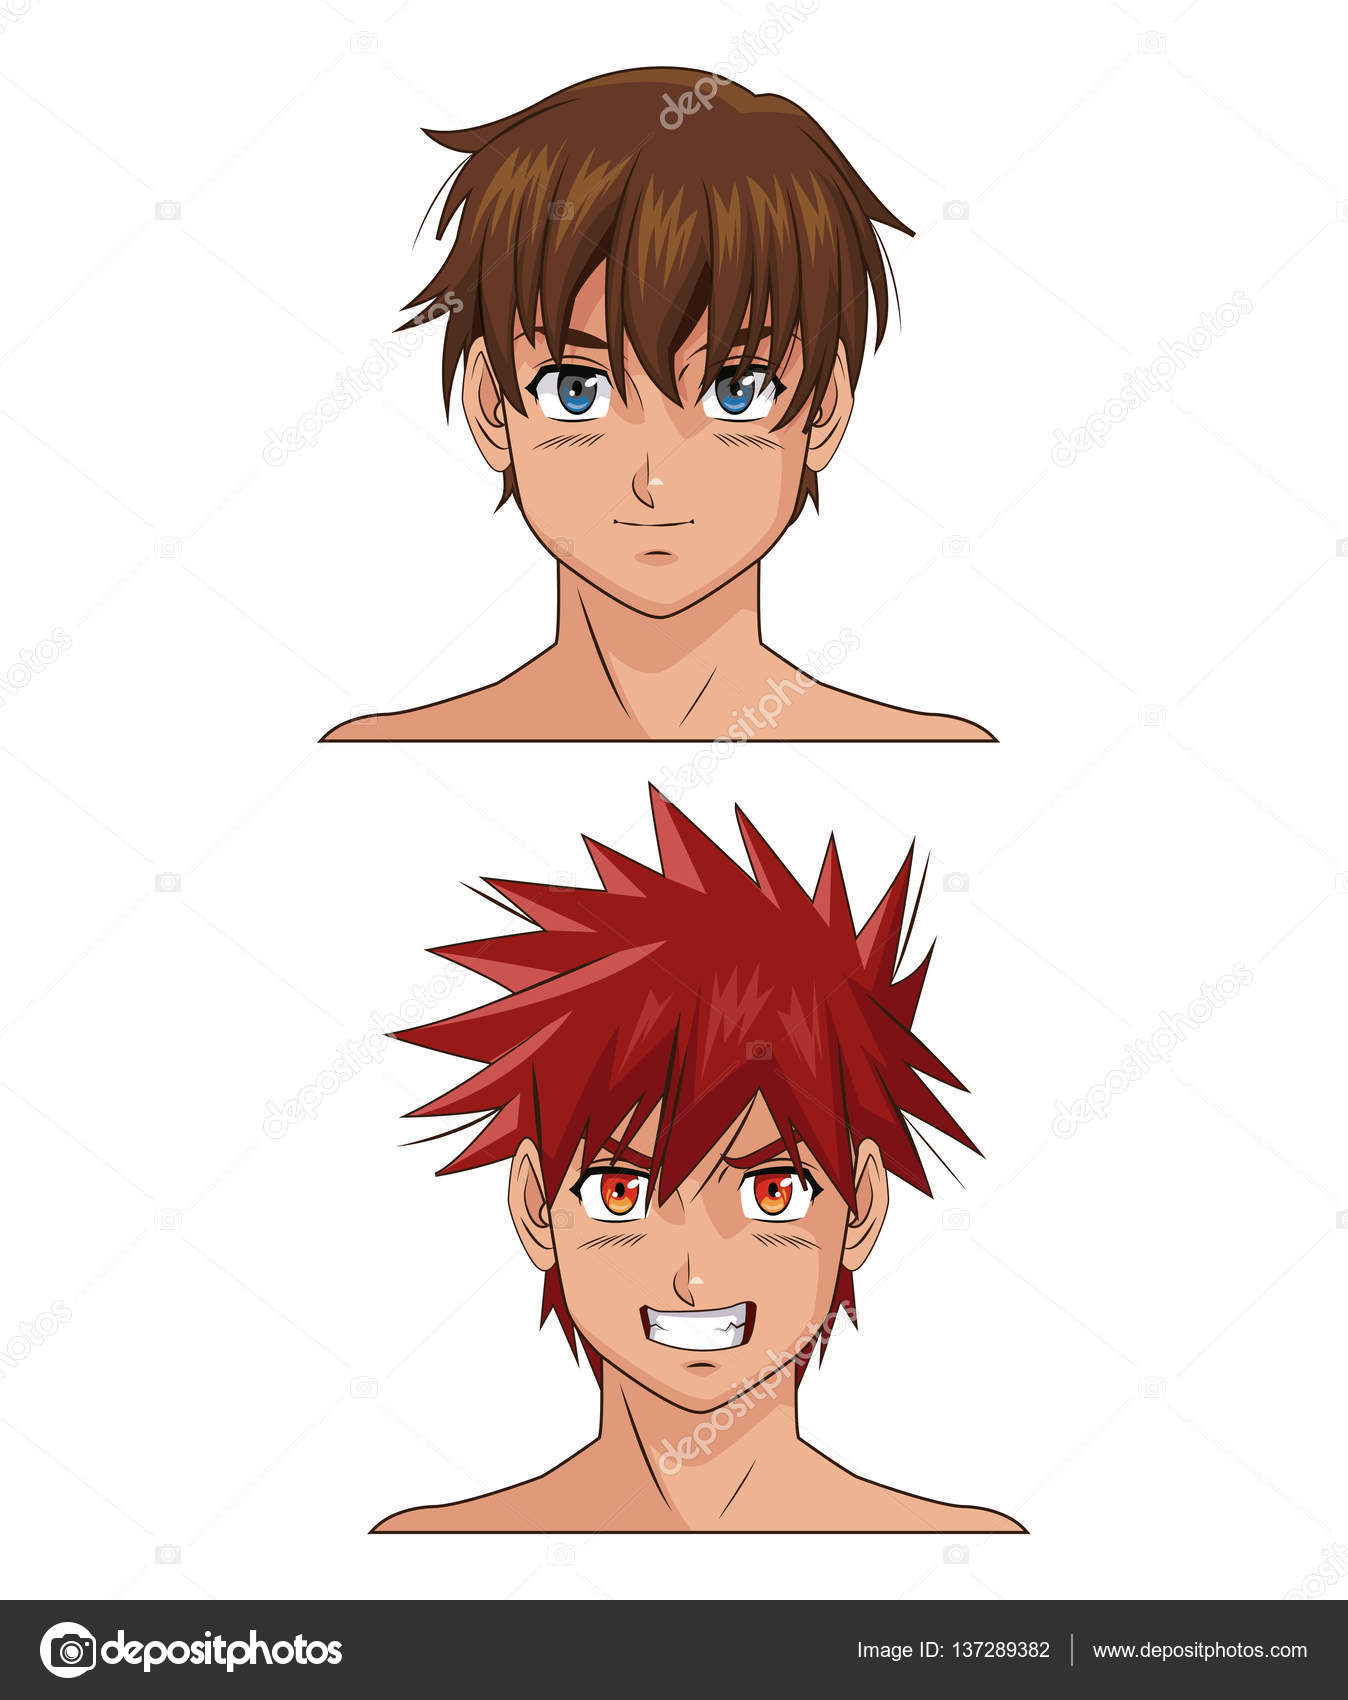 Dois anime rosto desenho animado masculino imagem vetorial de jemastock©  137289382